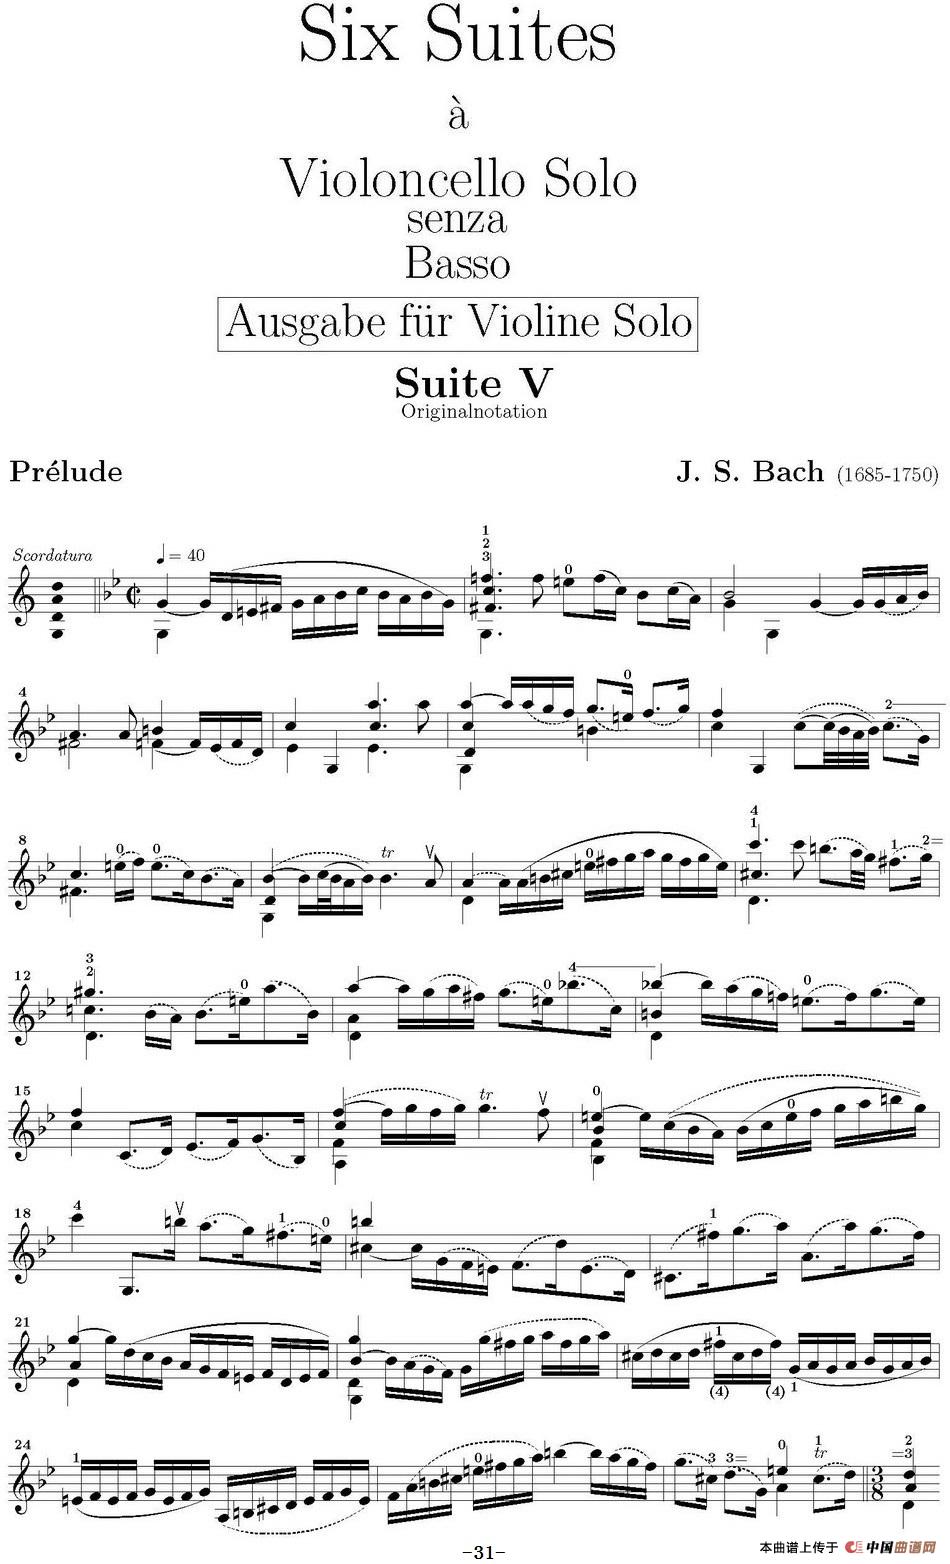 Six Suite Violincello Solo senza Basso（Suite V）（6首无伴奏大提琴组曲·Ⅴ）(1)_原文件名：巴赫《无伴奏大提琴组曲》(小提琴版)_页面_34-.jpg